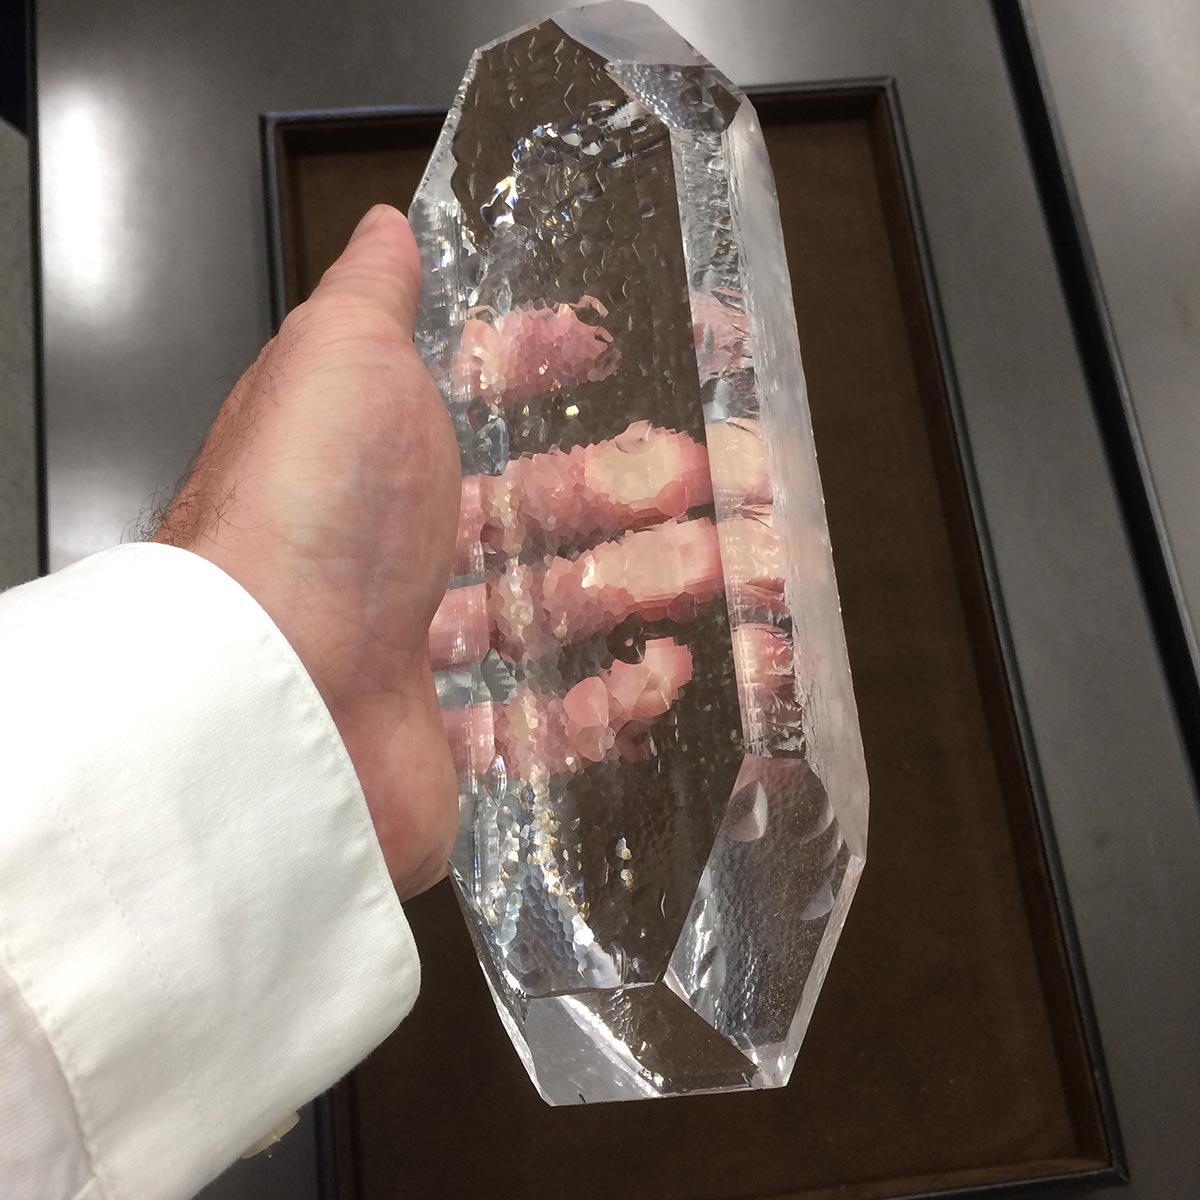 Seiko Quartz Crystal in my hands